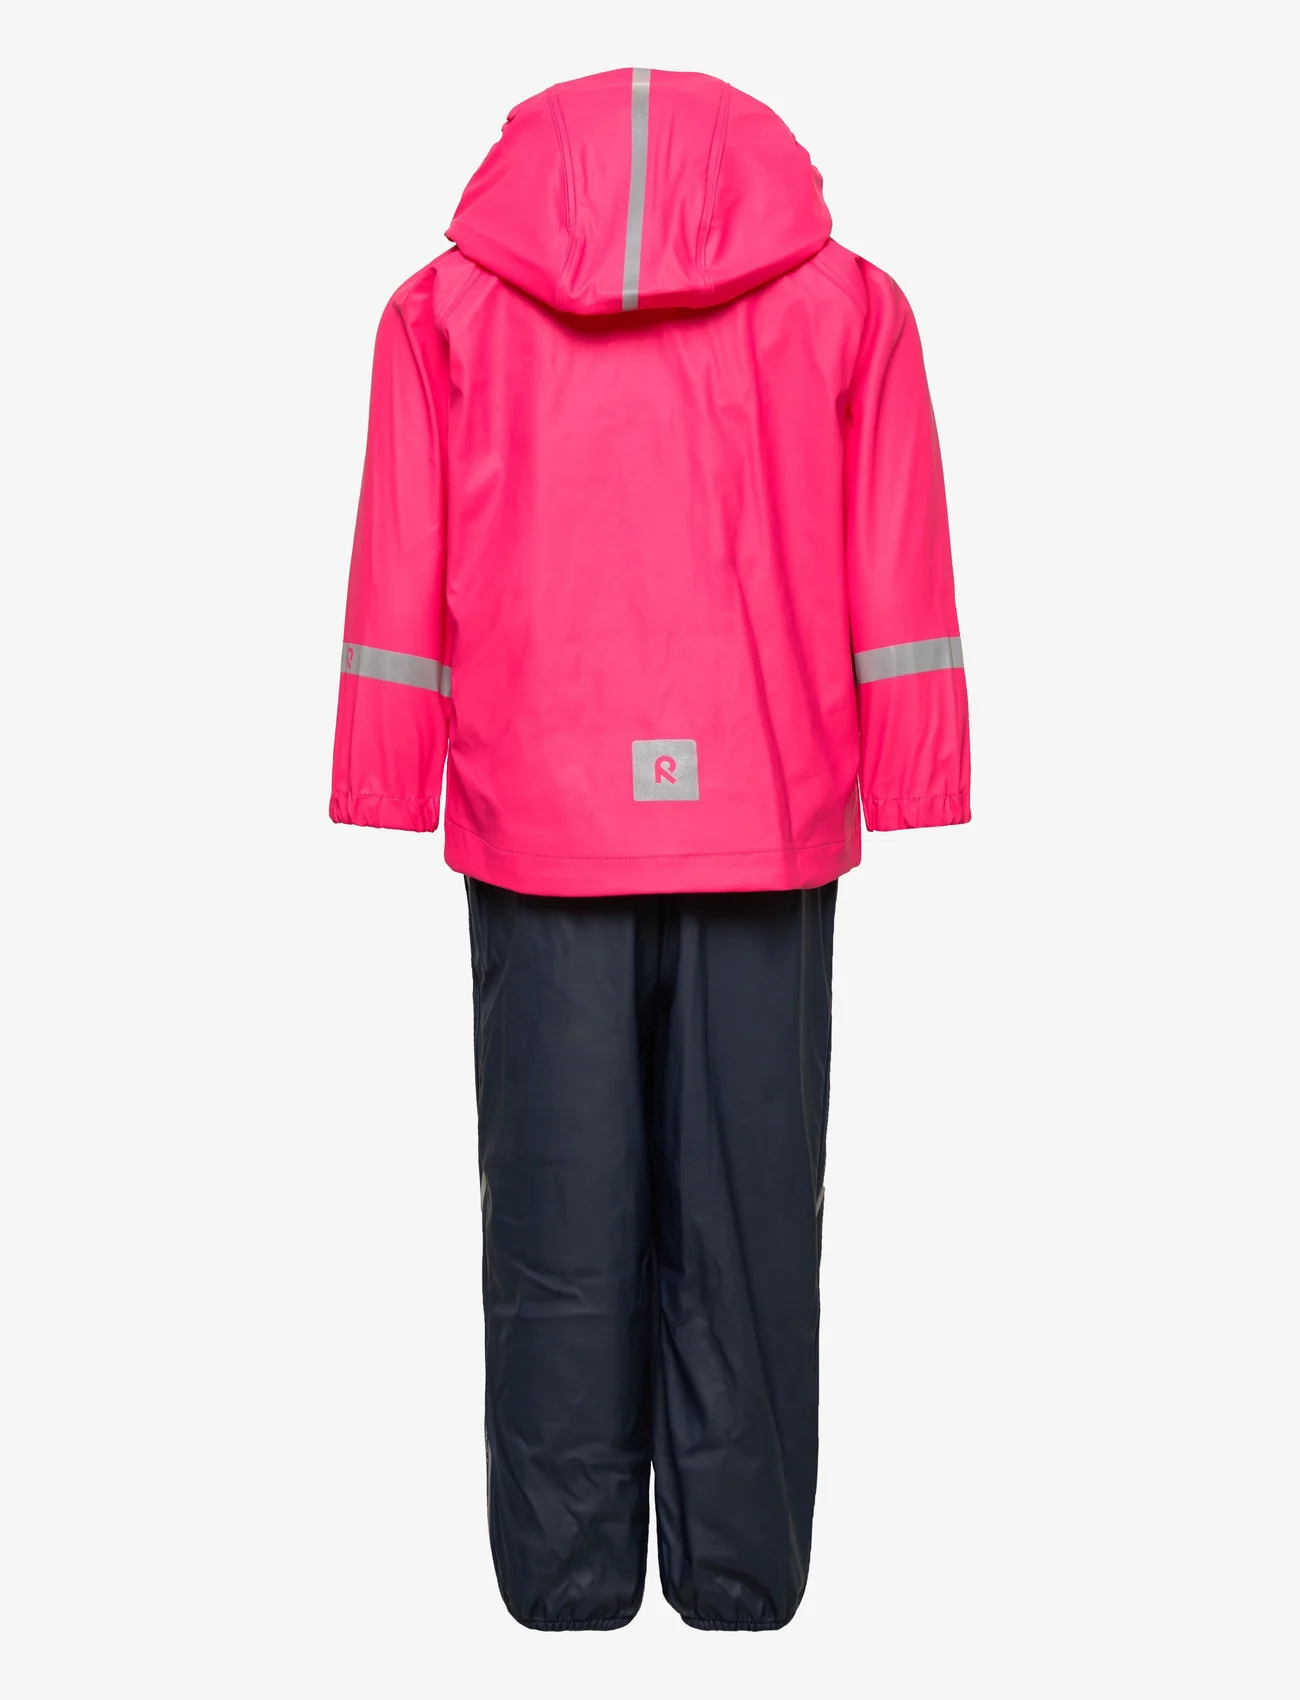 Reima - Rain outfit, Tihku - rain sets - candy pink - 1